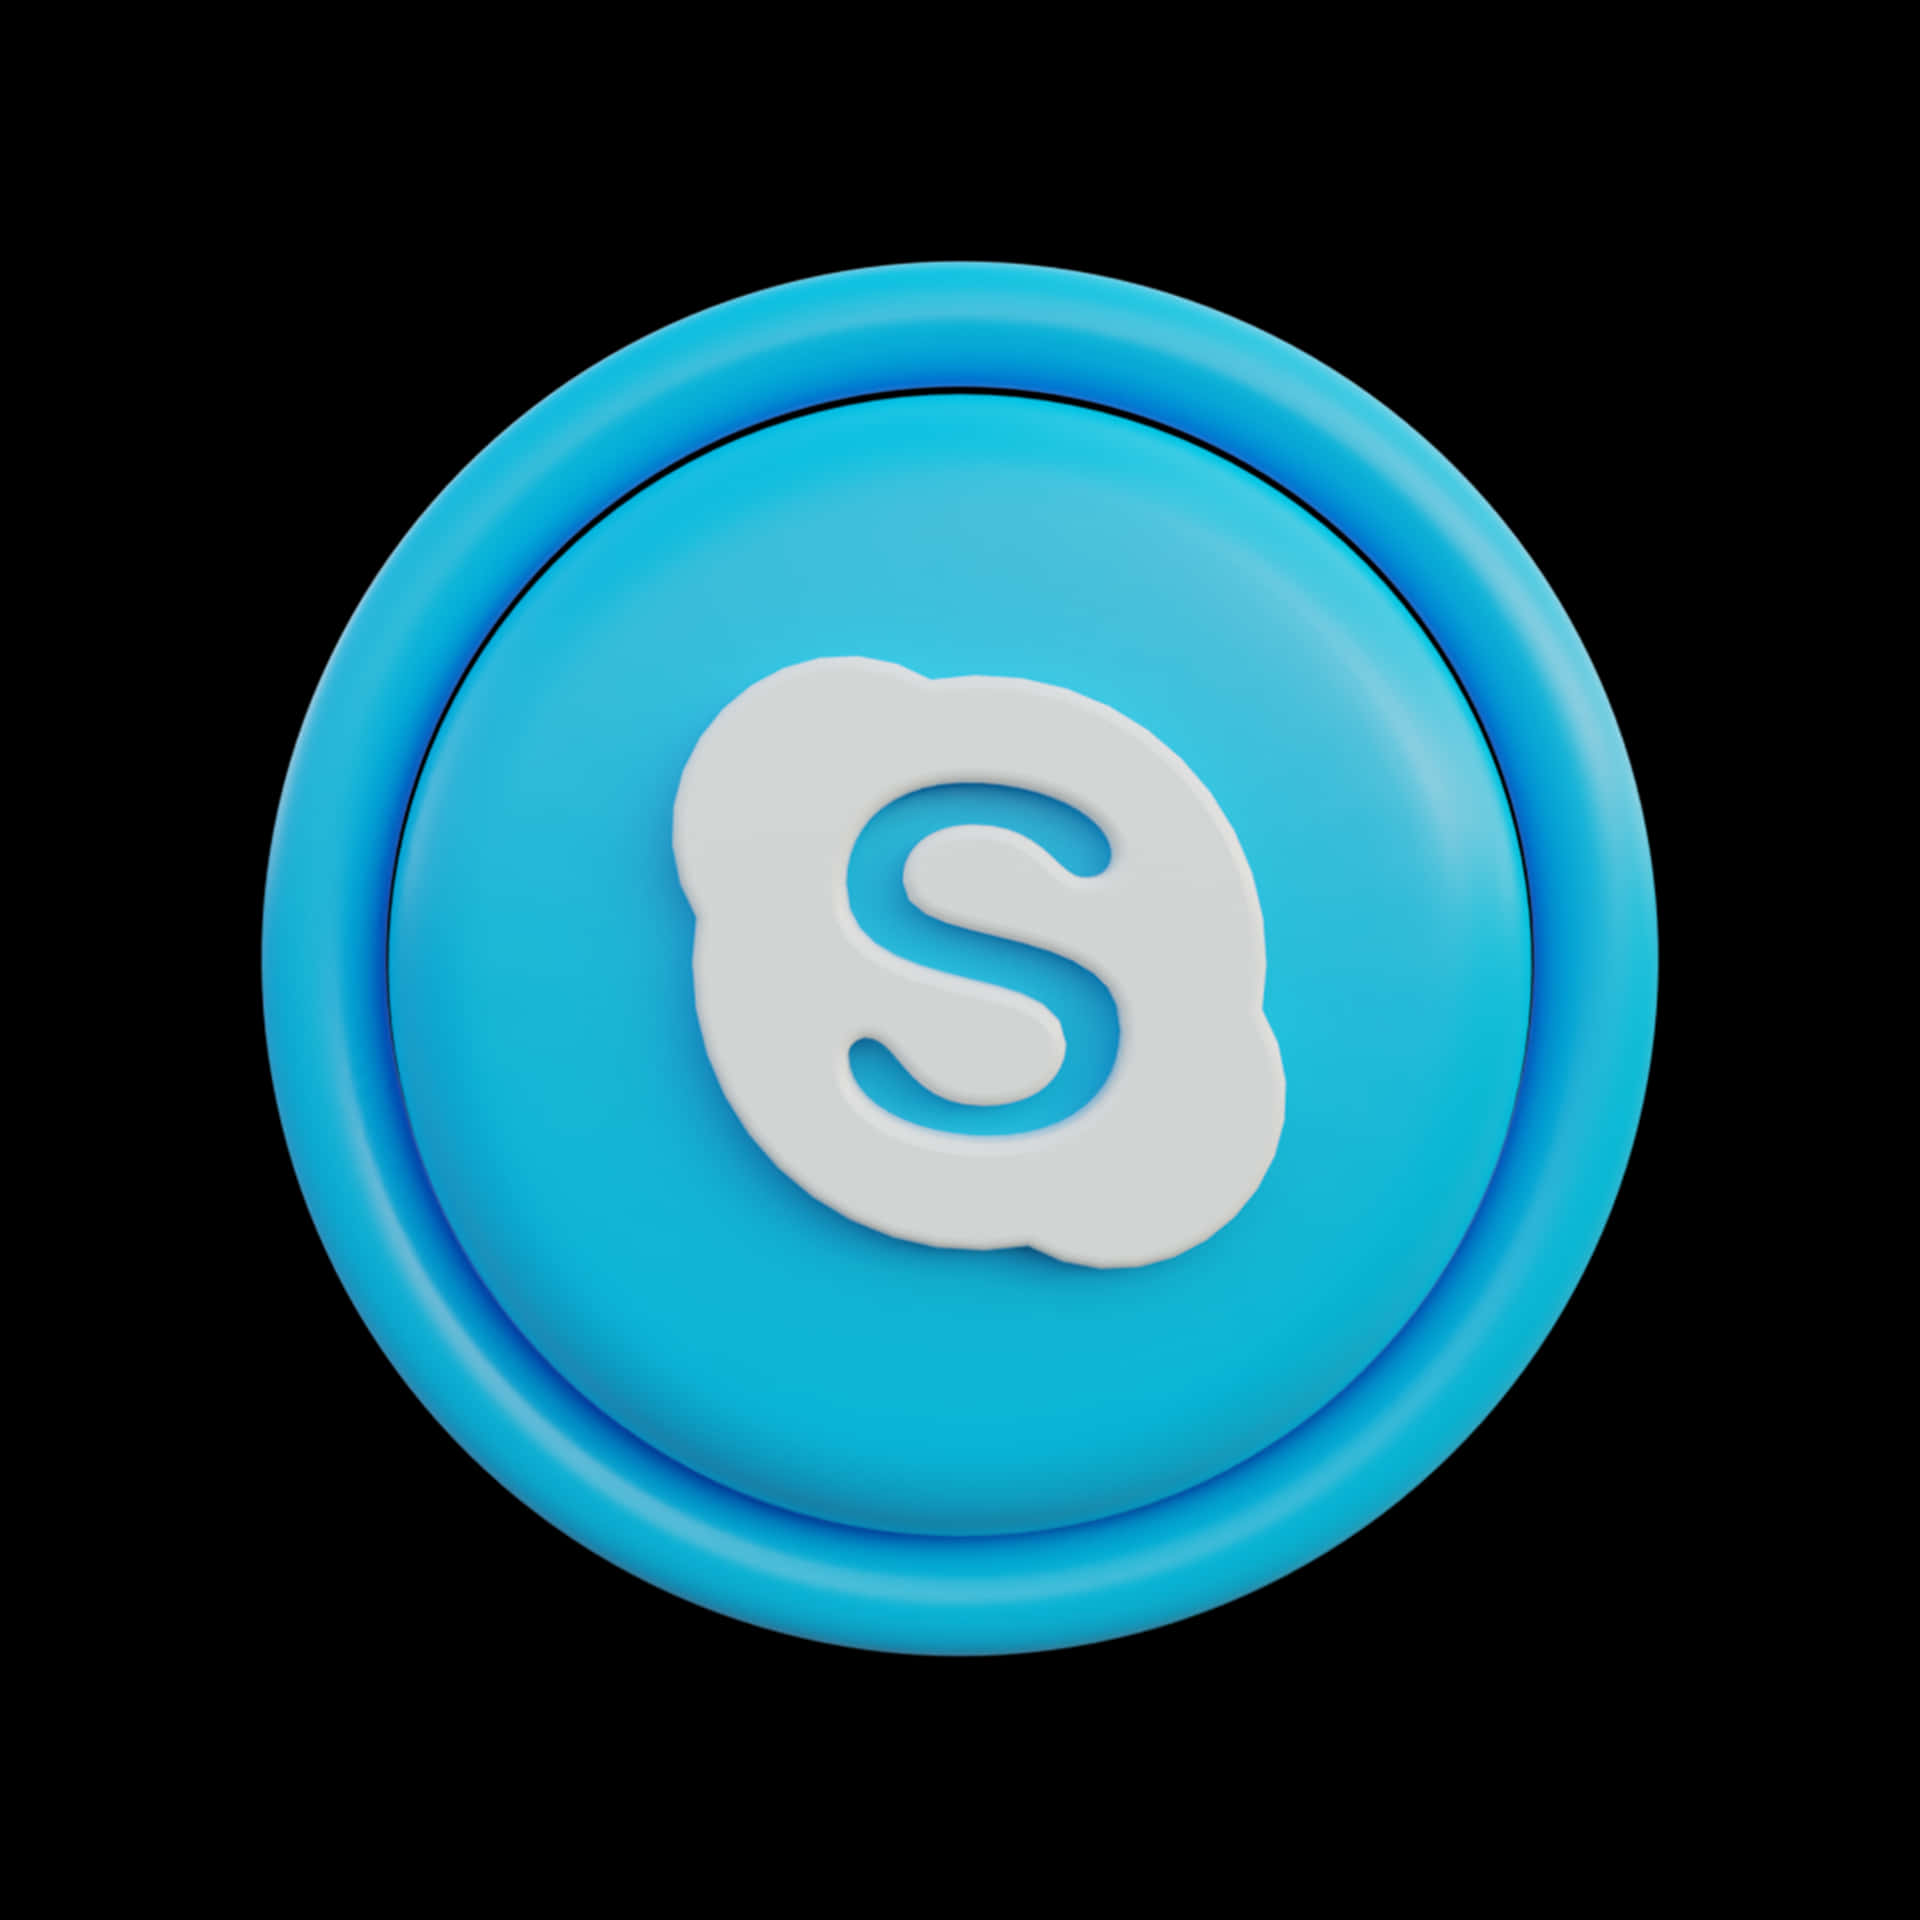 Skype Icon On A Blue Button